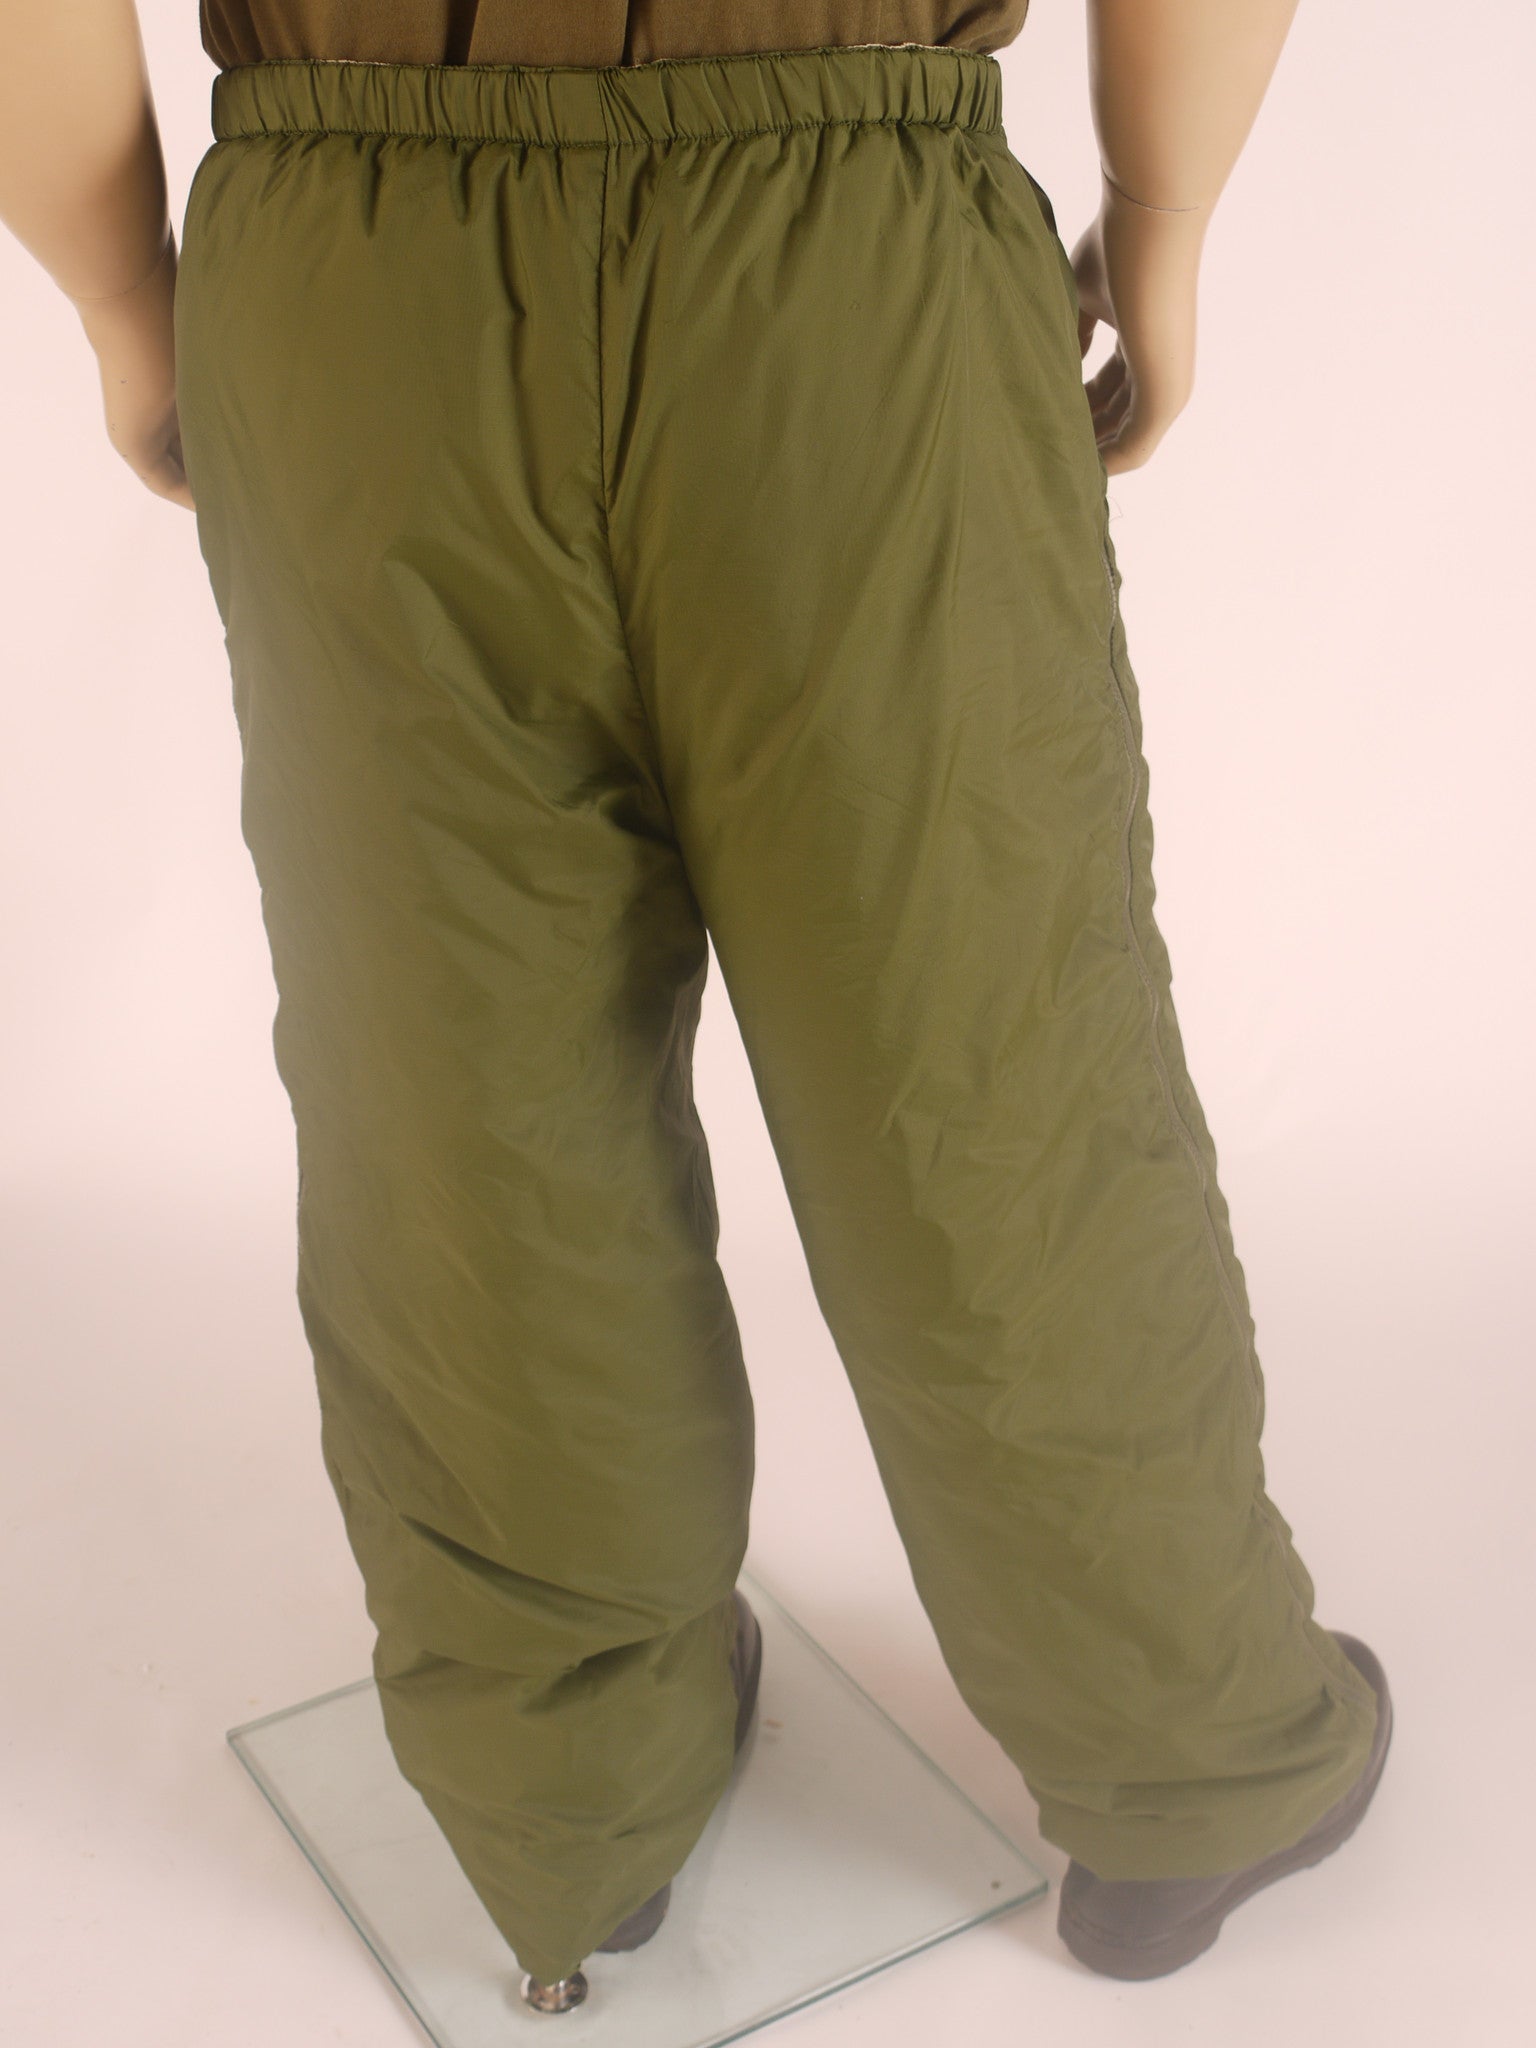 British thermal trousers, olive drab/khaki, surplus